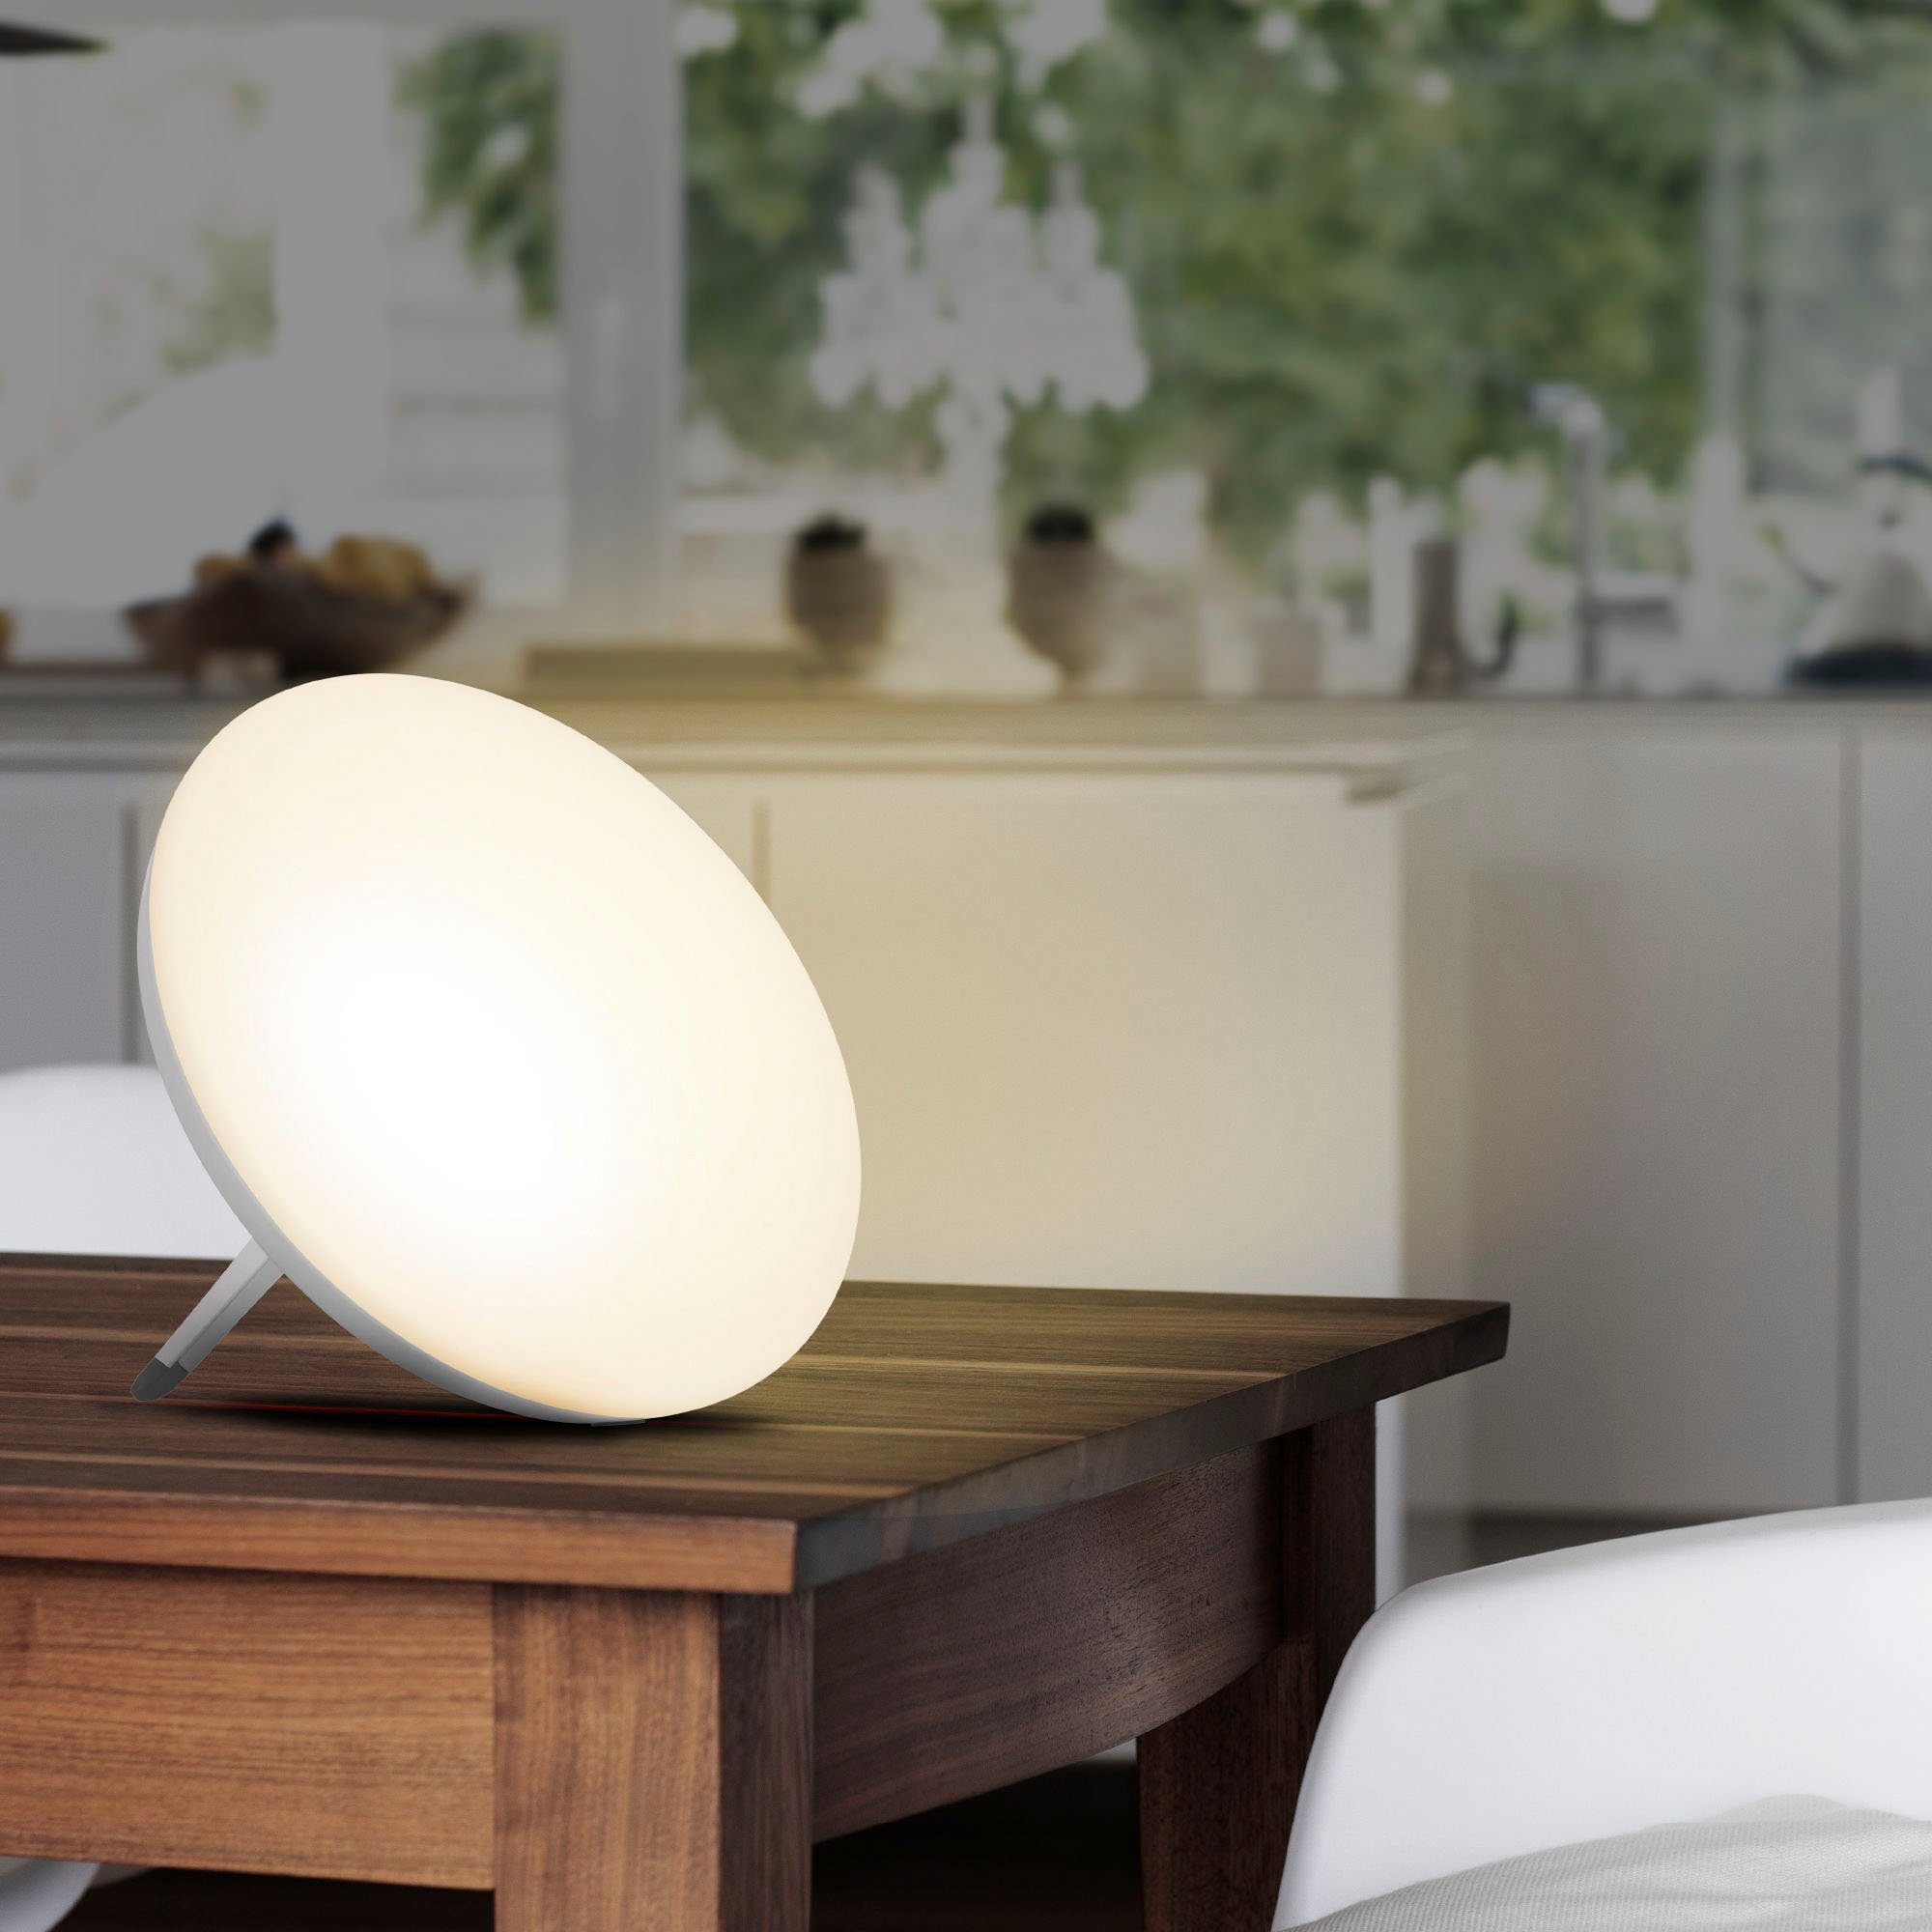 LT500, LED integriert, Tageslichtlampe fest Warmweiß Medisana Farbwechsel,